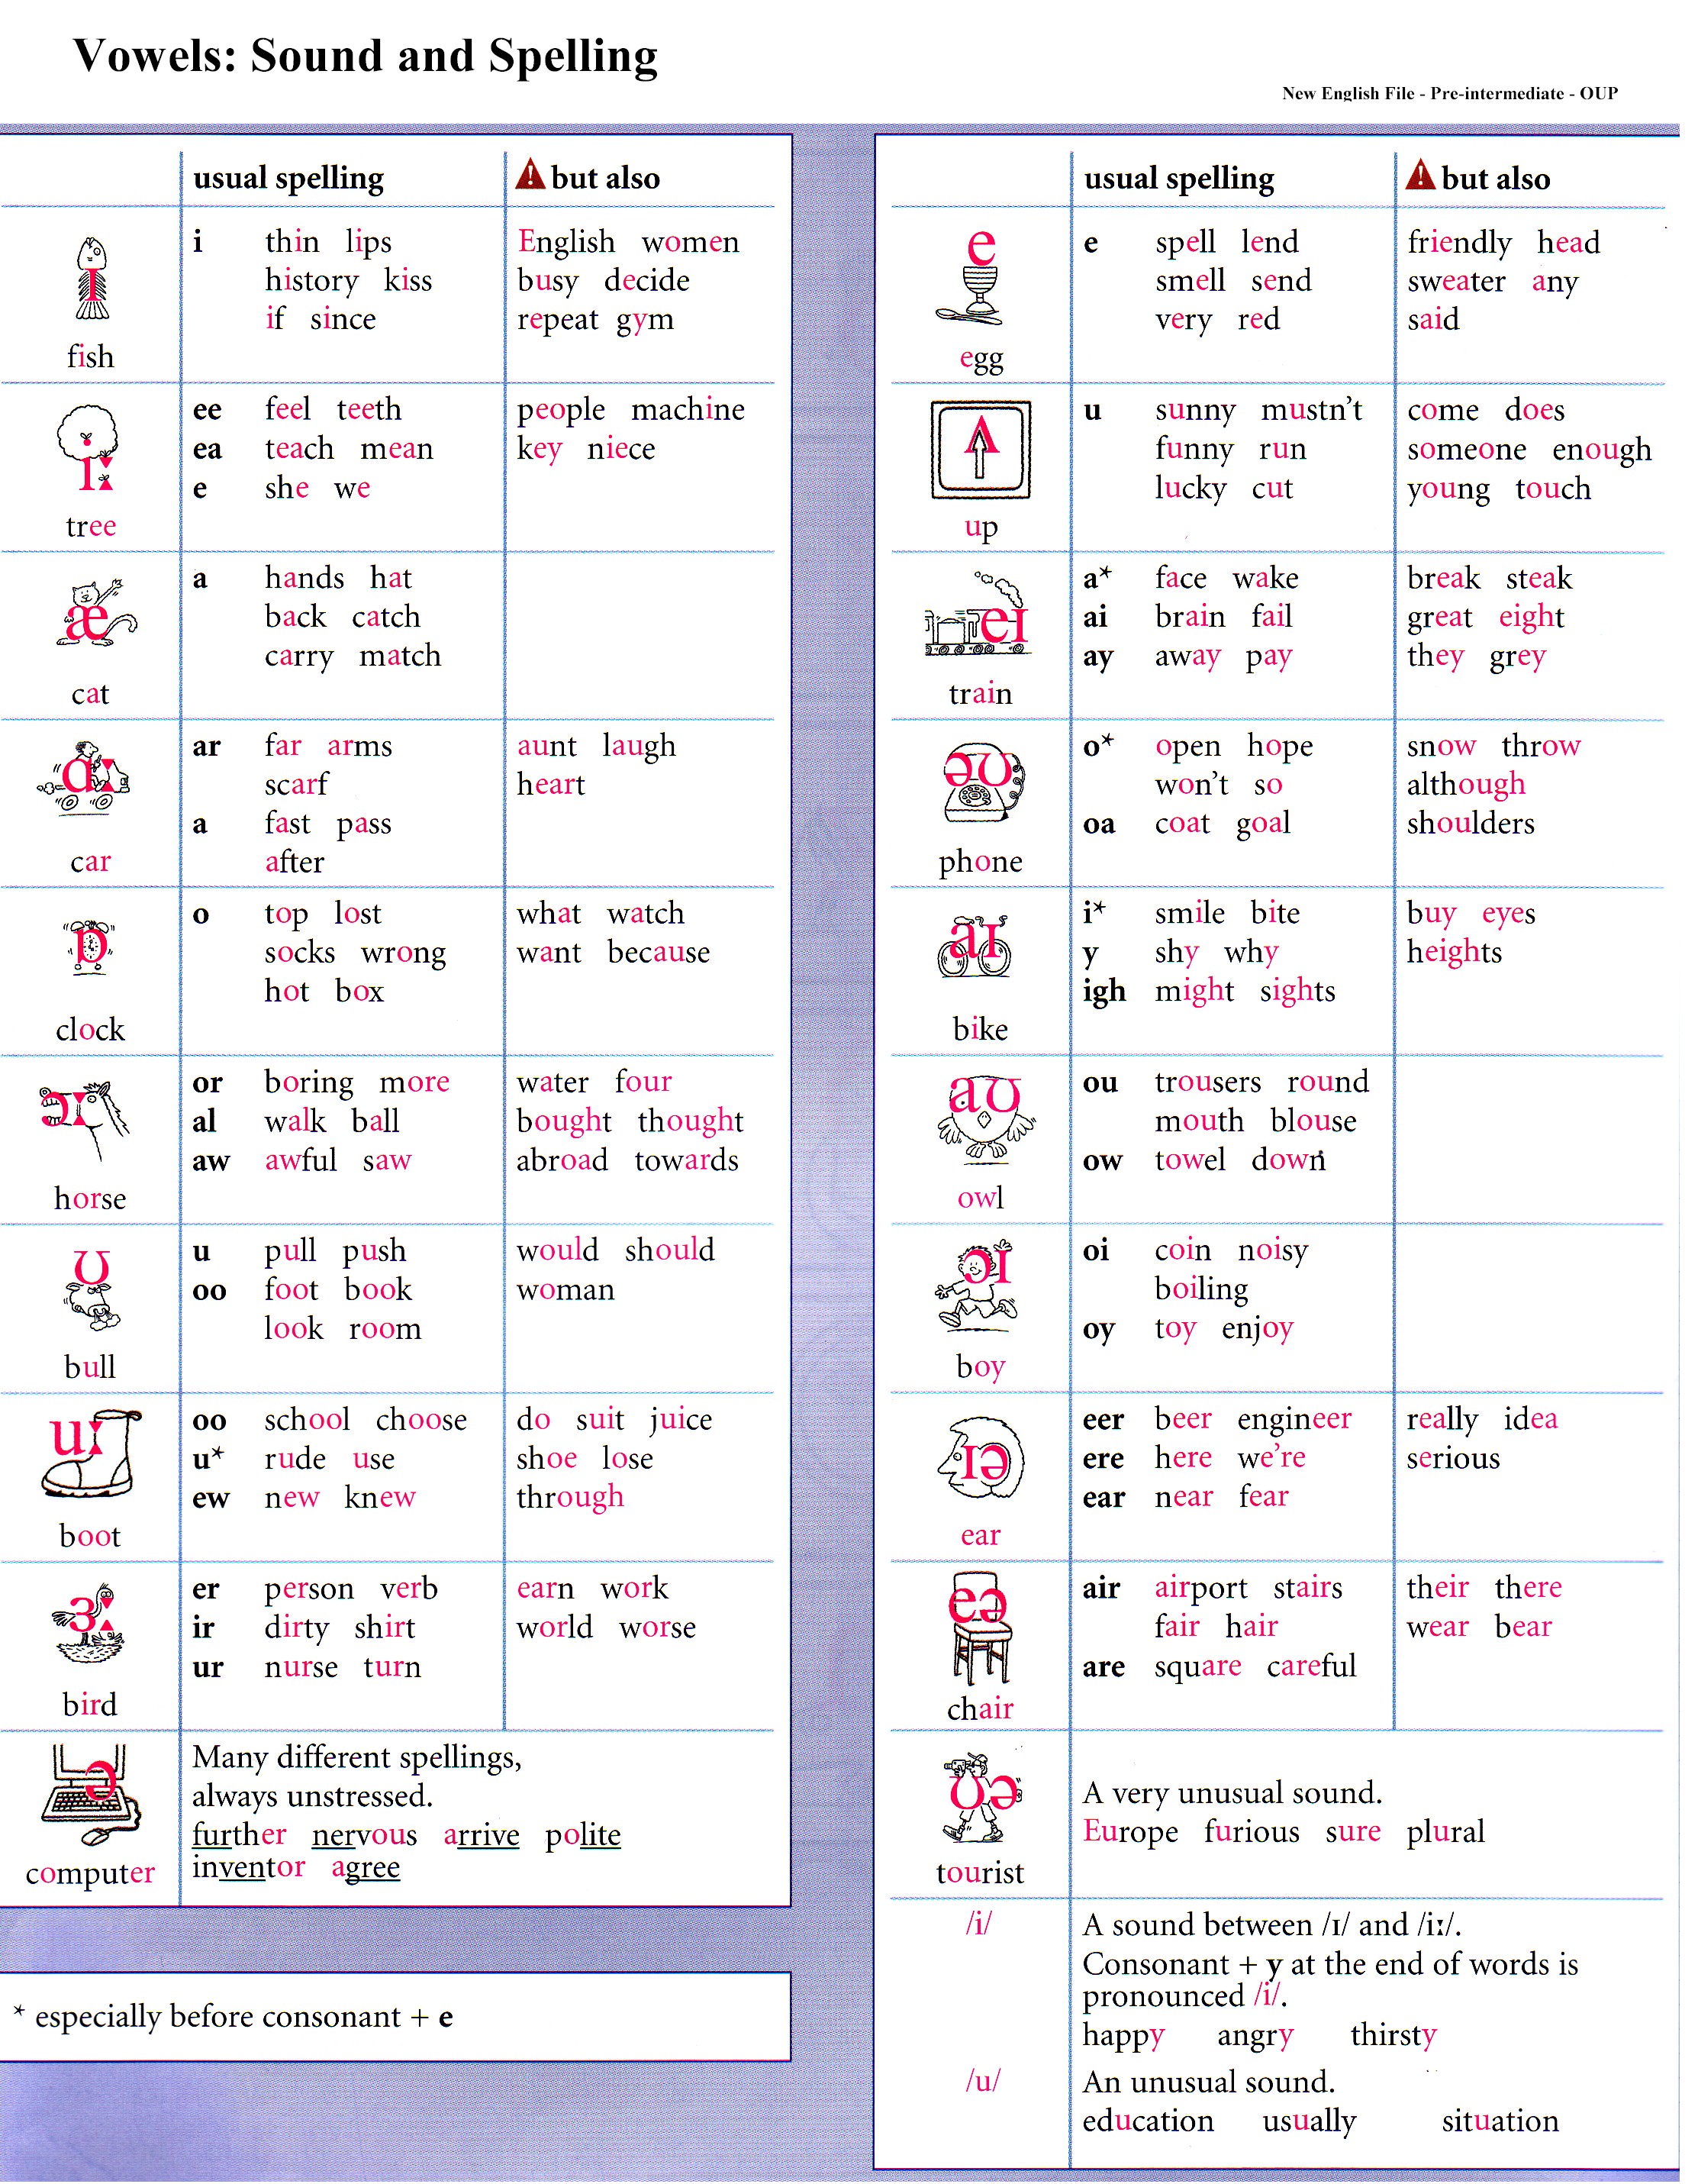 English File Phonemic Chart